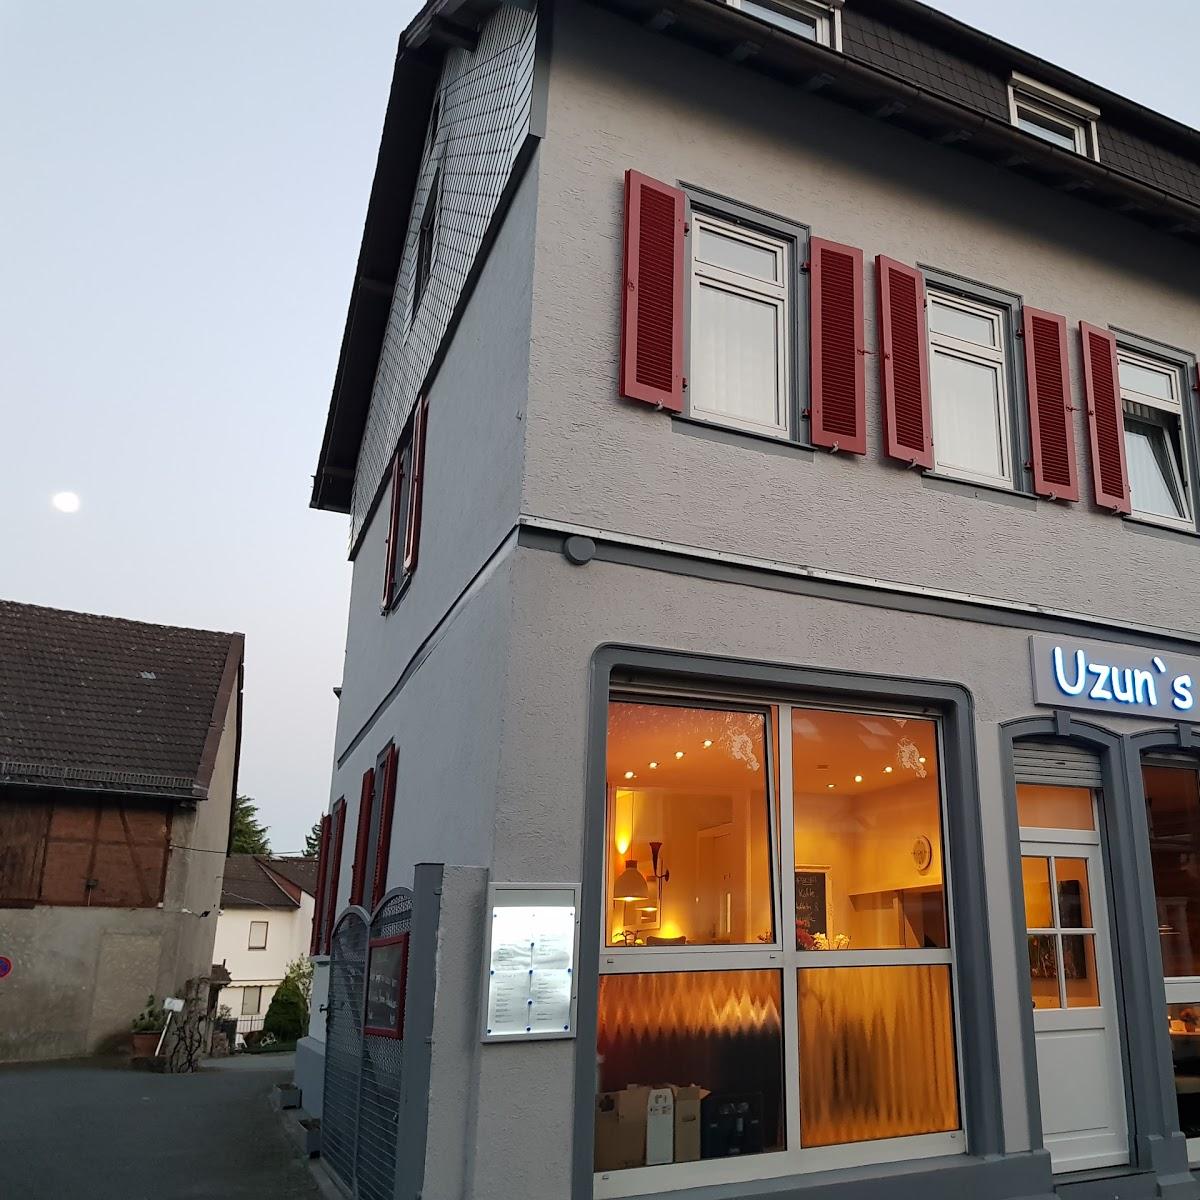 Restaurant "Uzuns Restaurant" in Bad Soden am Taunus